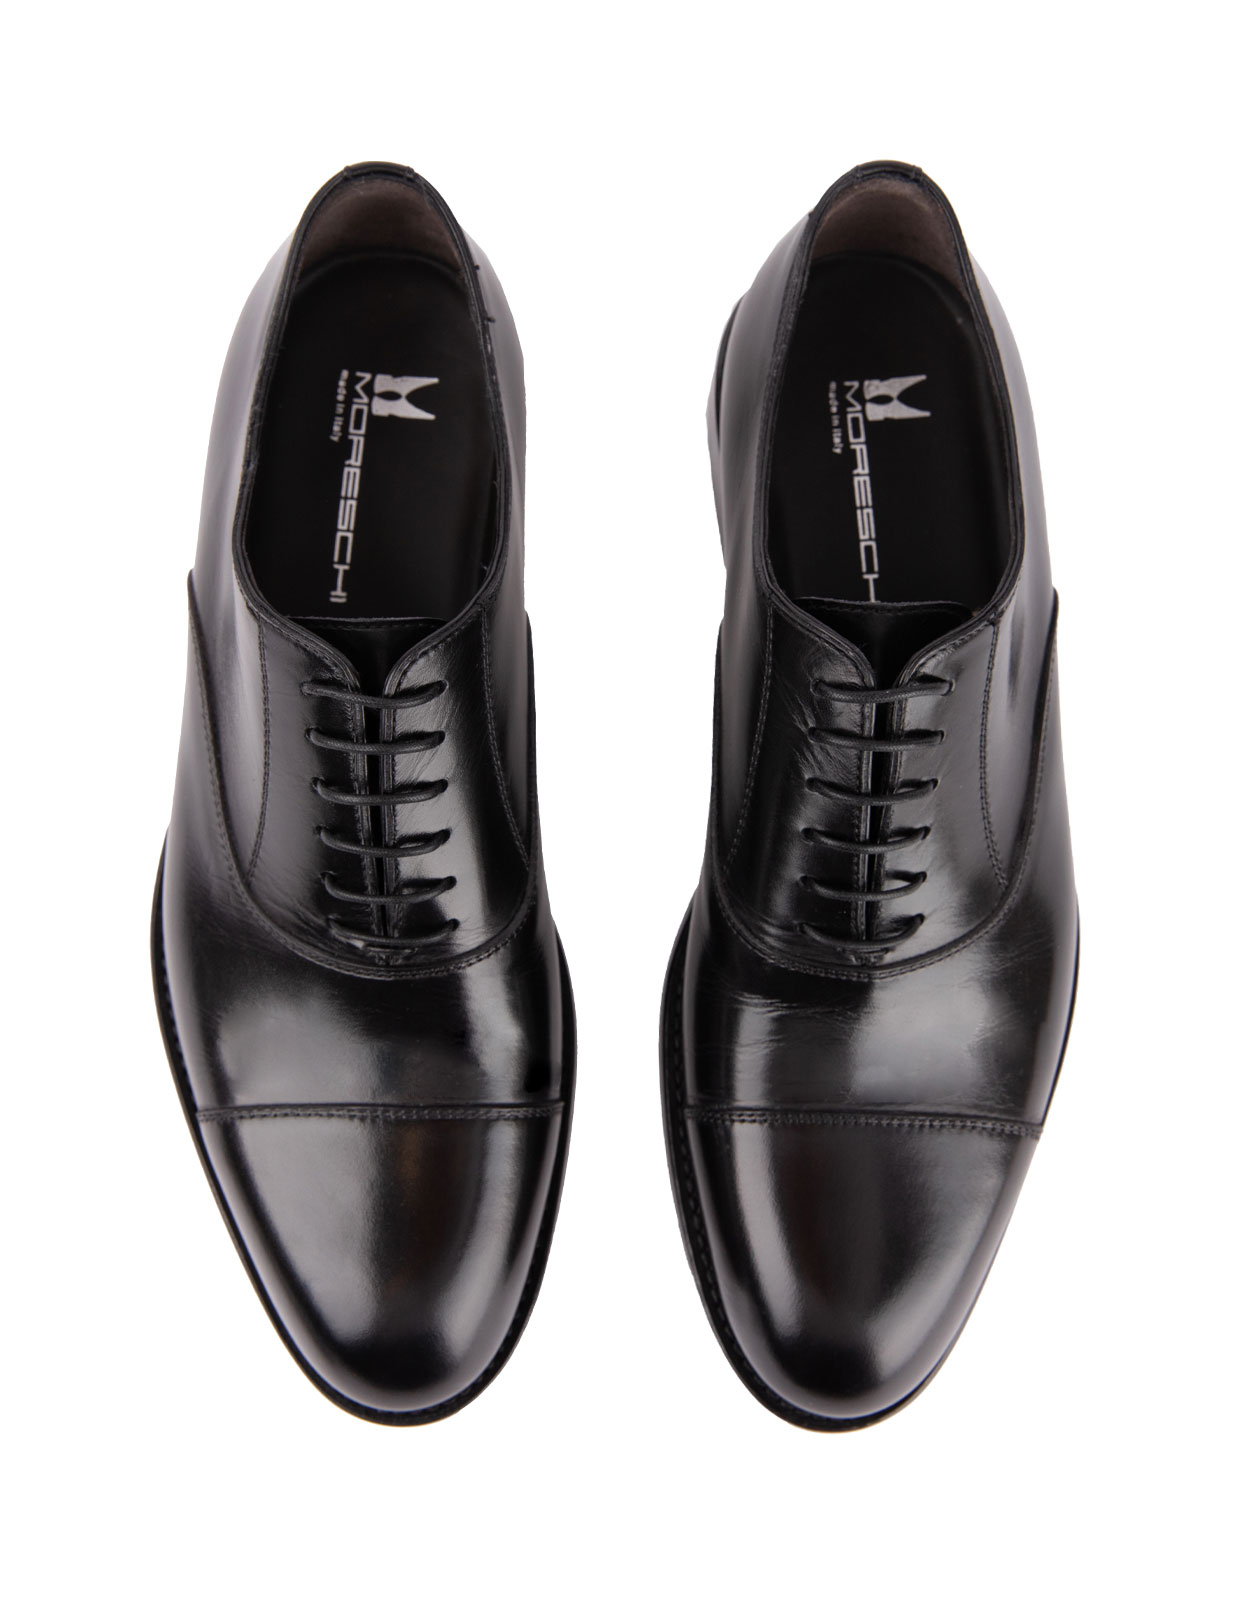 New York Oxford Shoes Calfskin Black Stl 7